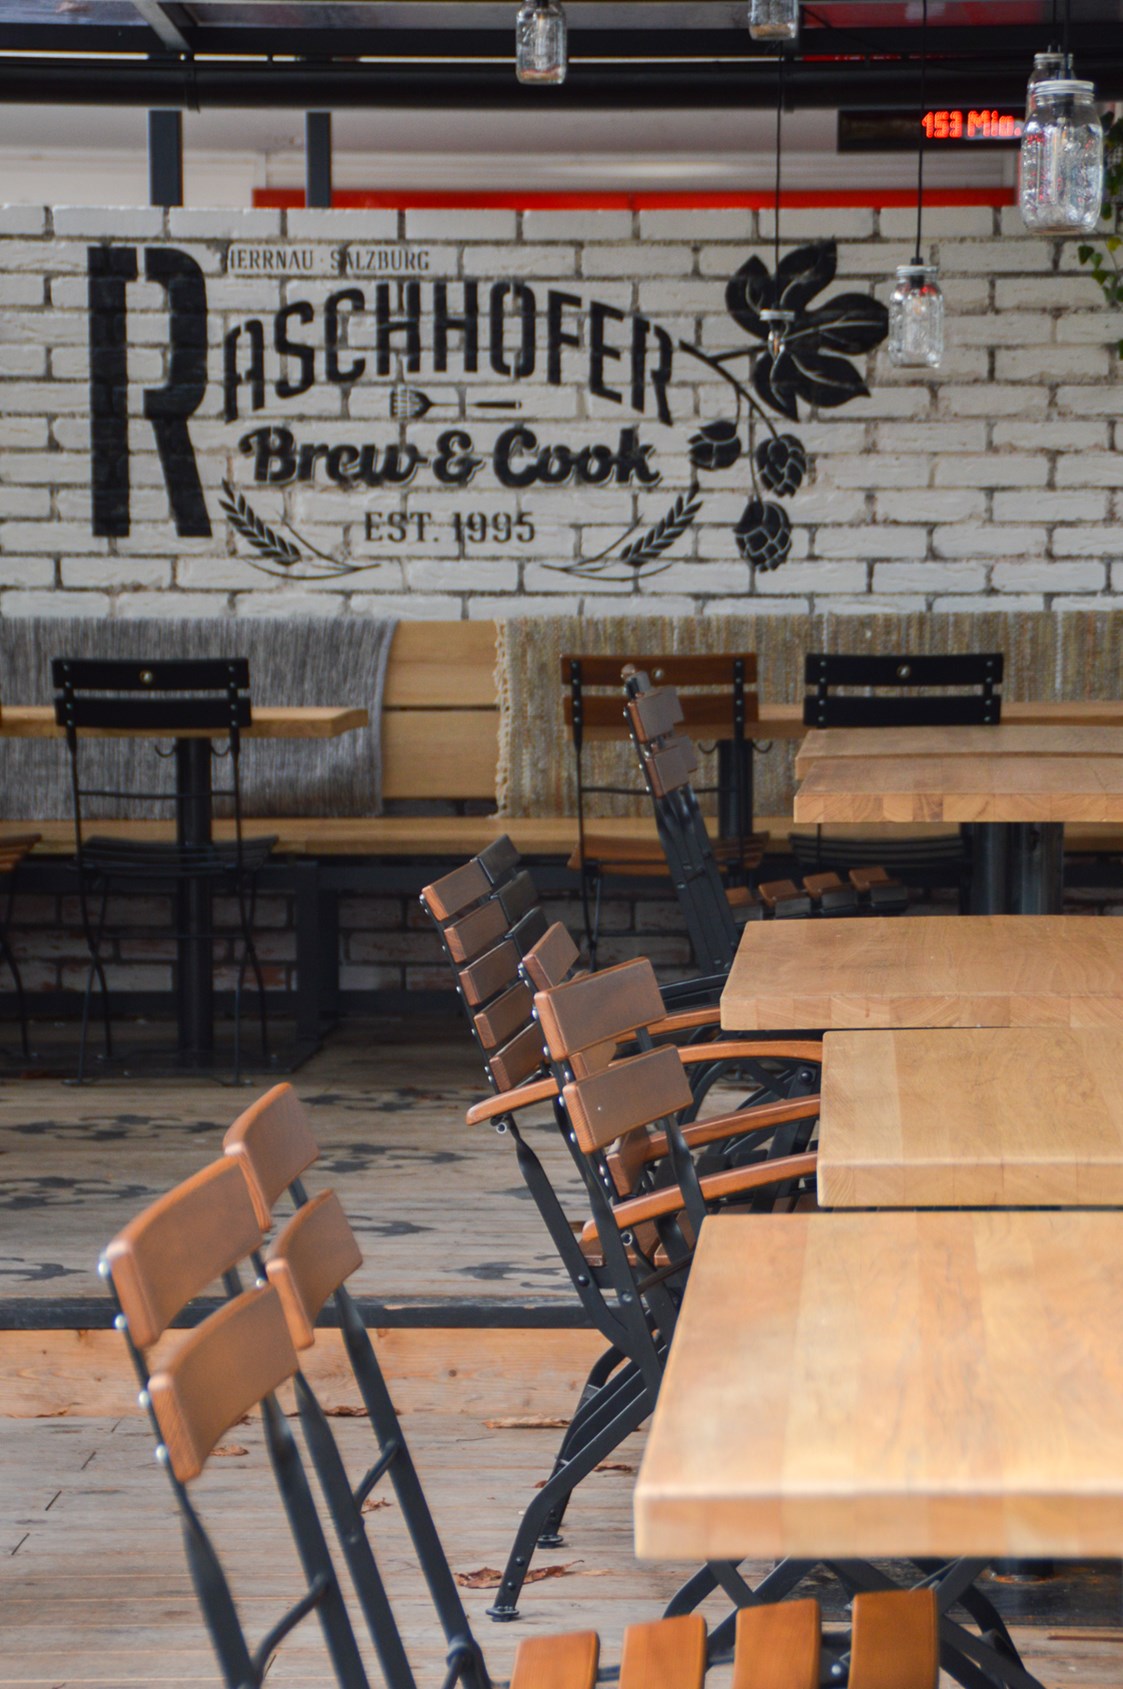 Restaurant: Raschhofer Herrnau